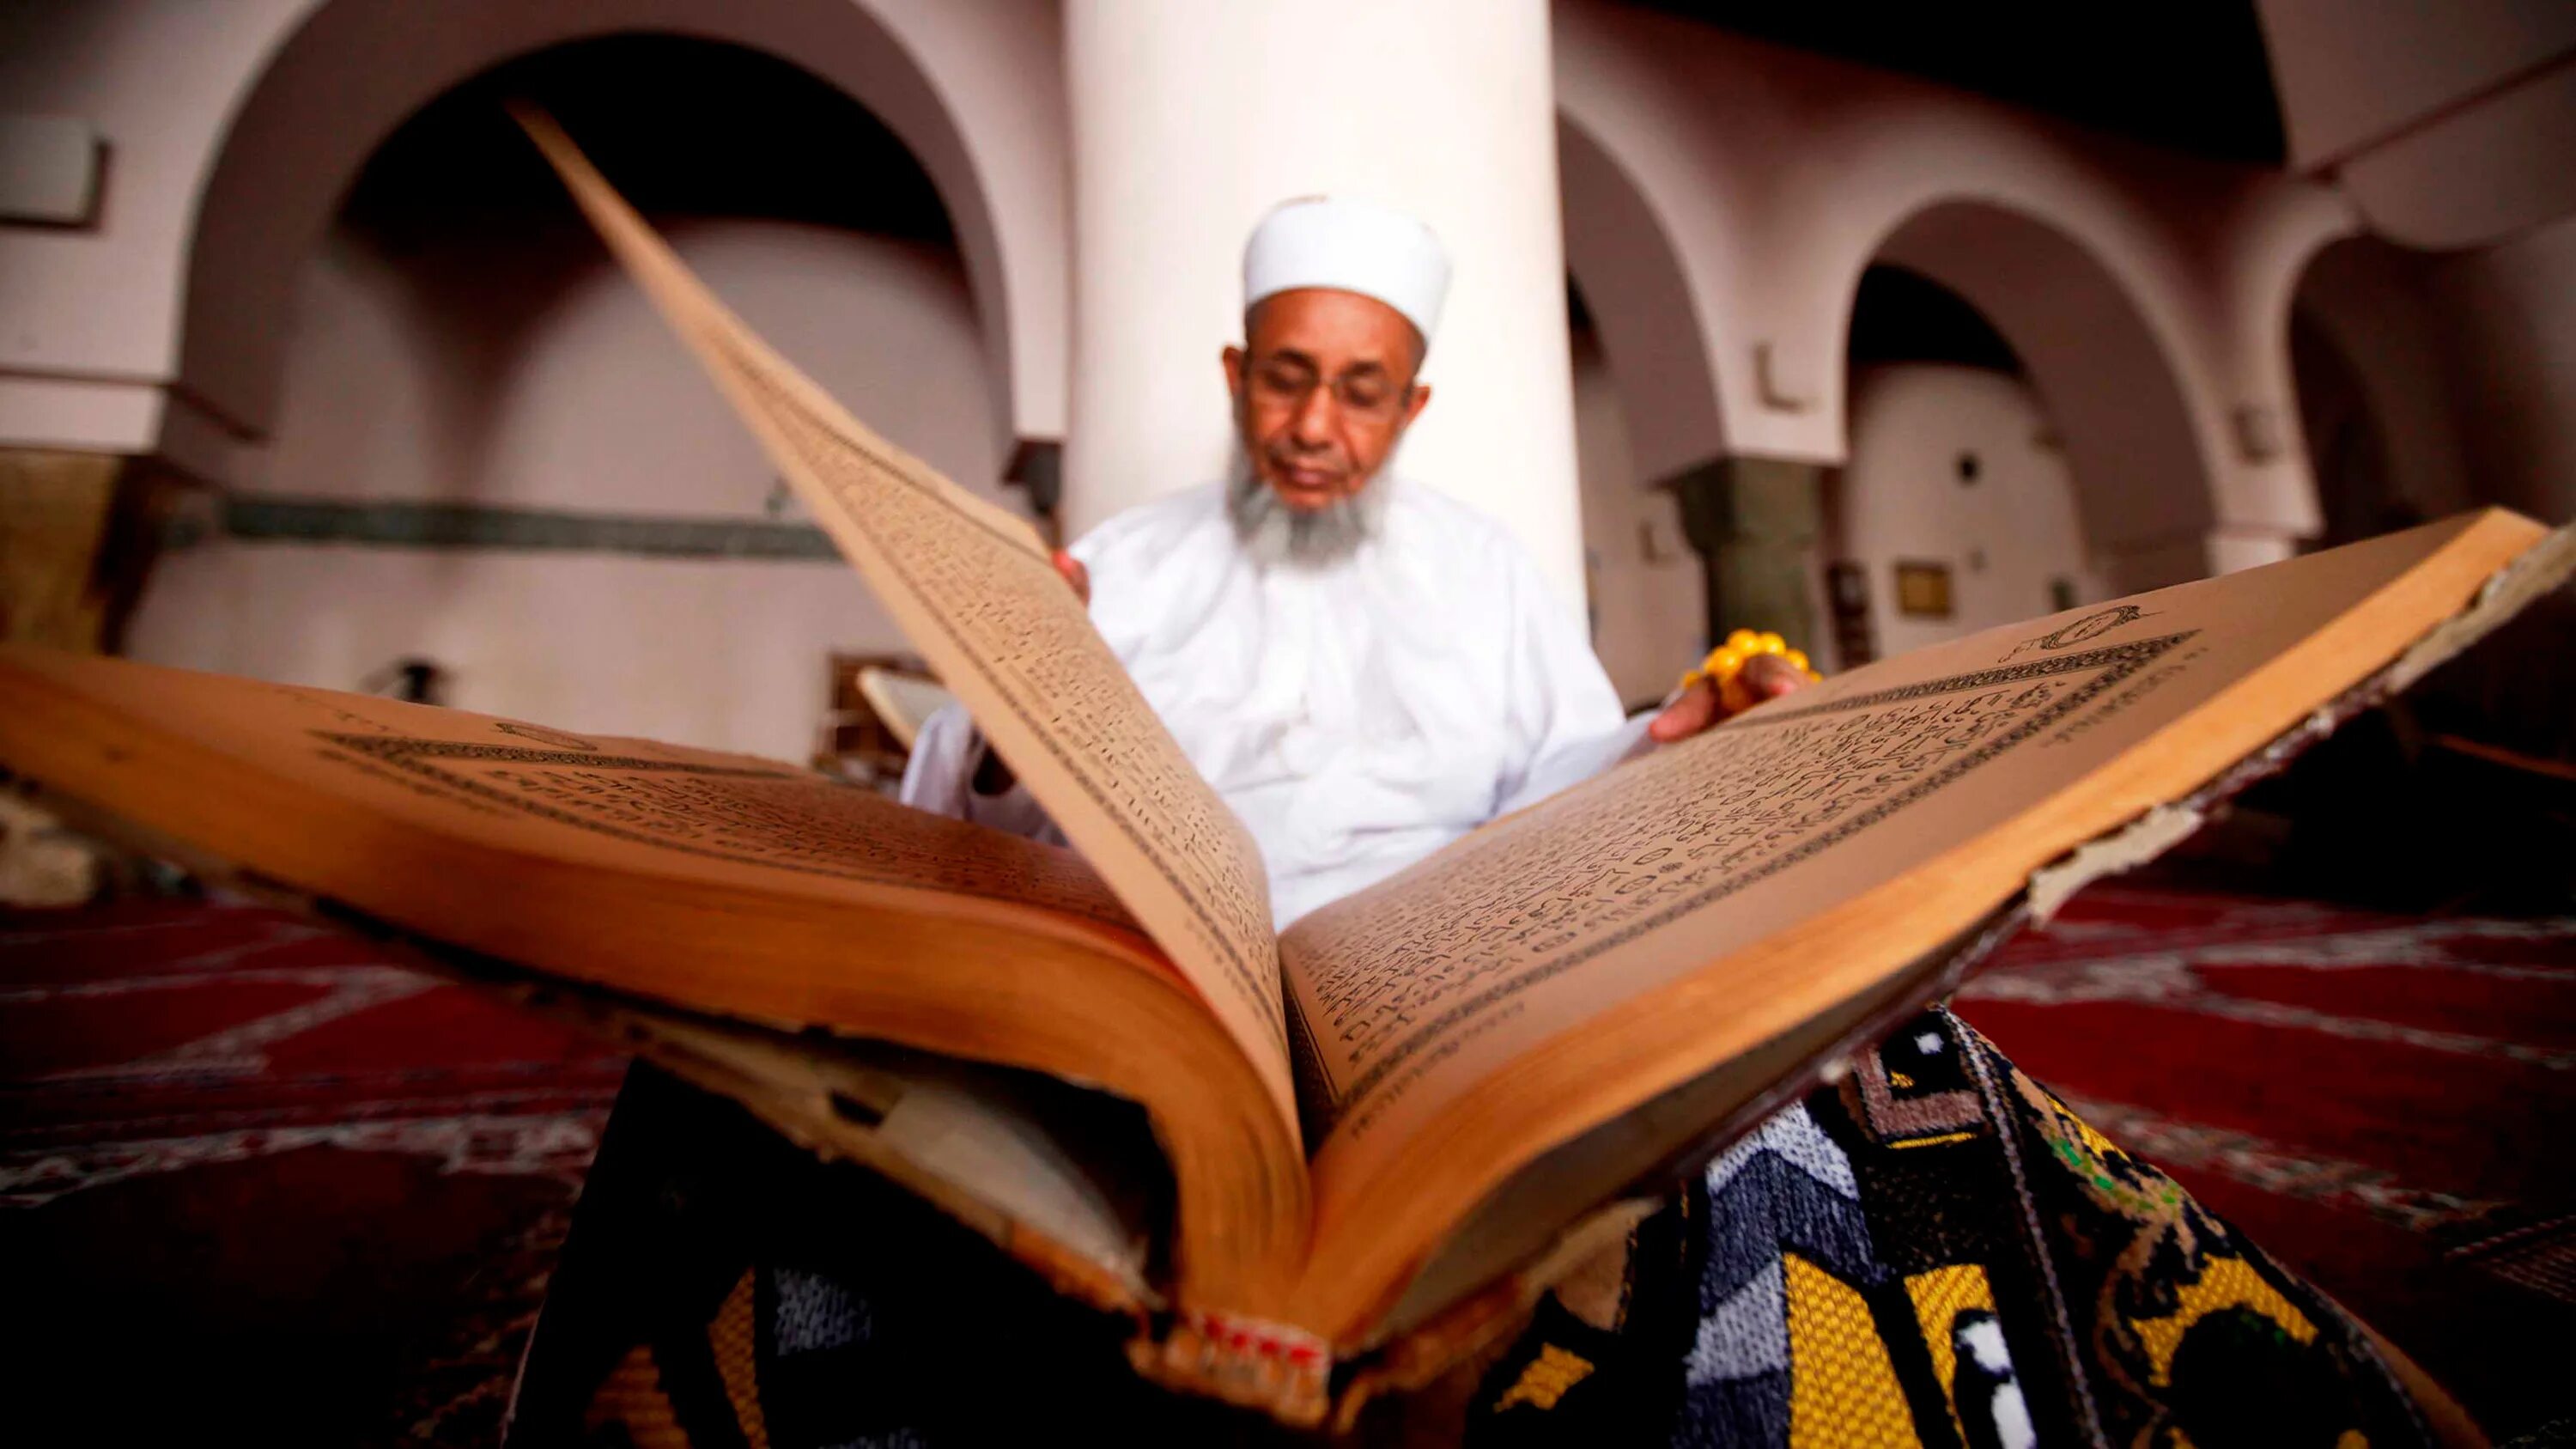 Коран Халифа Османа. Чтение Корана Хафиз Мухаммад. Мусульманин с Кораном. Чтение Корана в мечети.